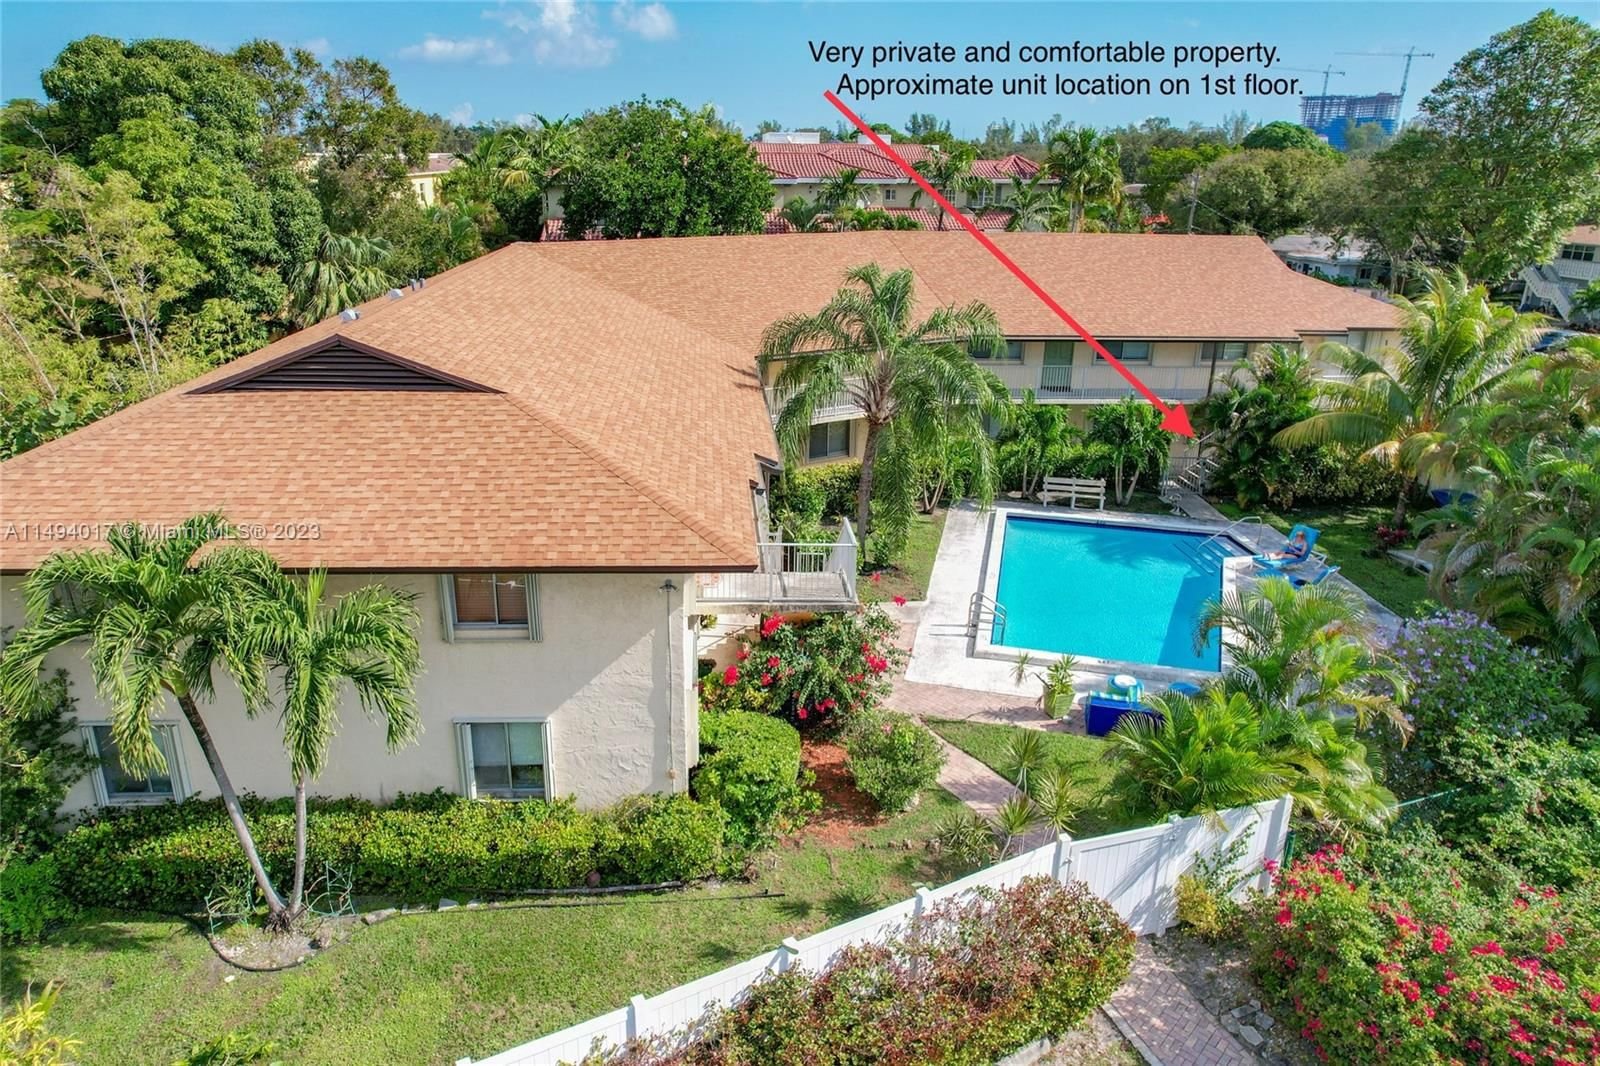 Real estate property located at 1250 Miami Rd #6, Broward County, BAMBOO VILLAS CONDO, Fort Lauderdale, FL